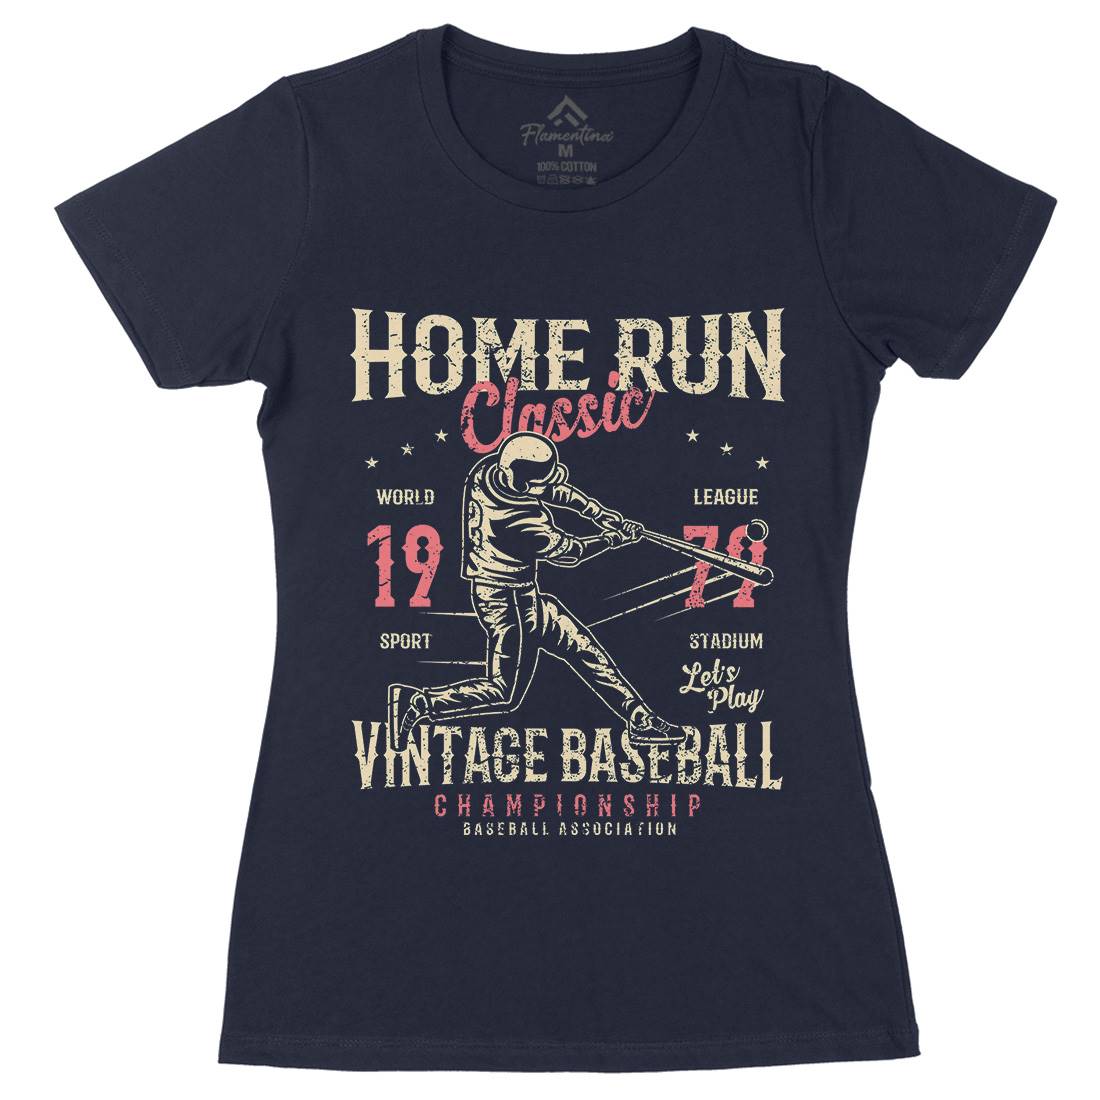 Home Run Classic Womens Organic Crew Neck T-Shirt Sport A065